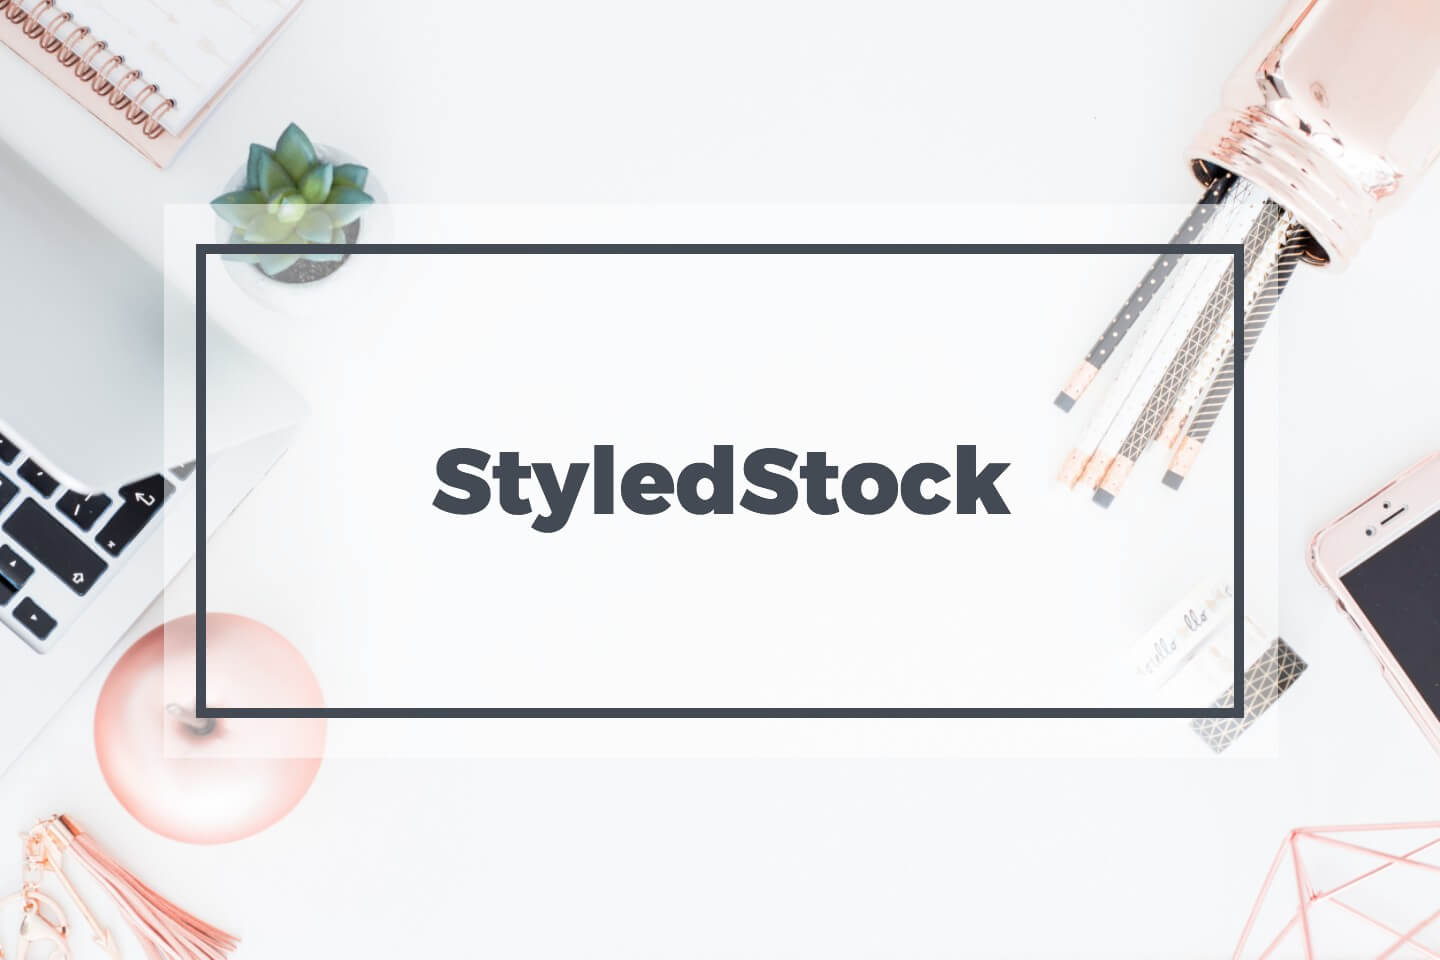 StyledStock free stock photos